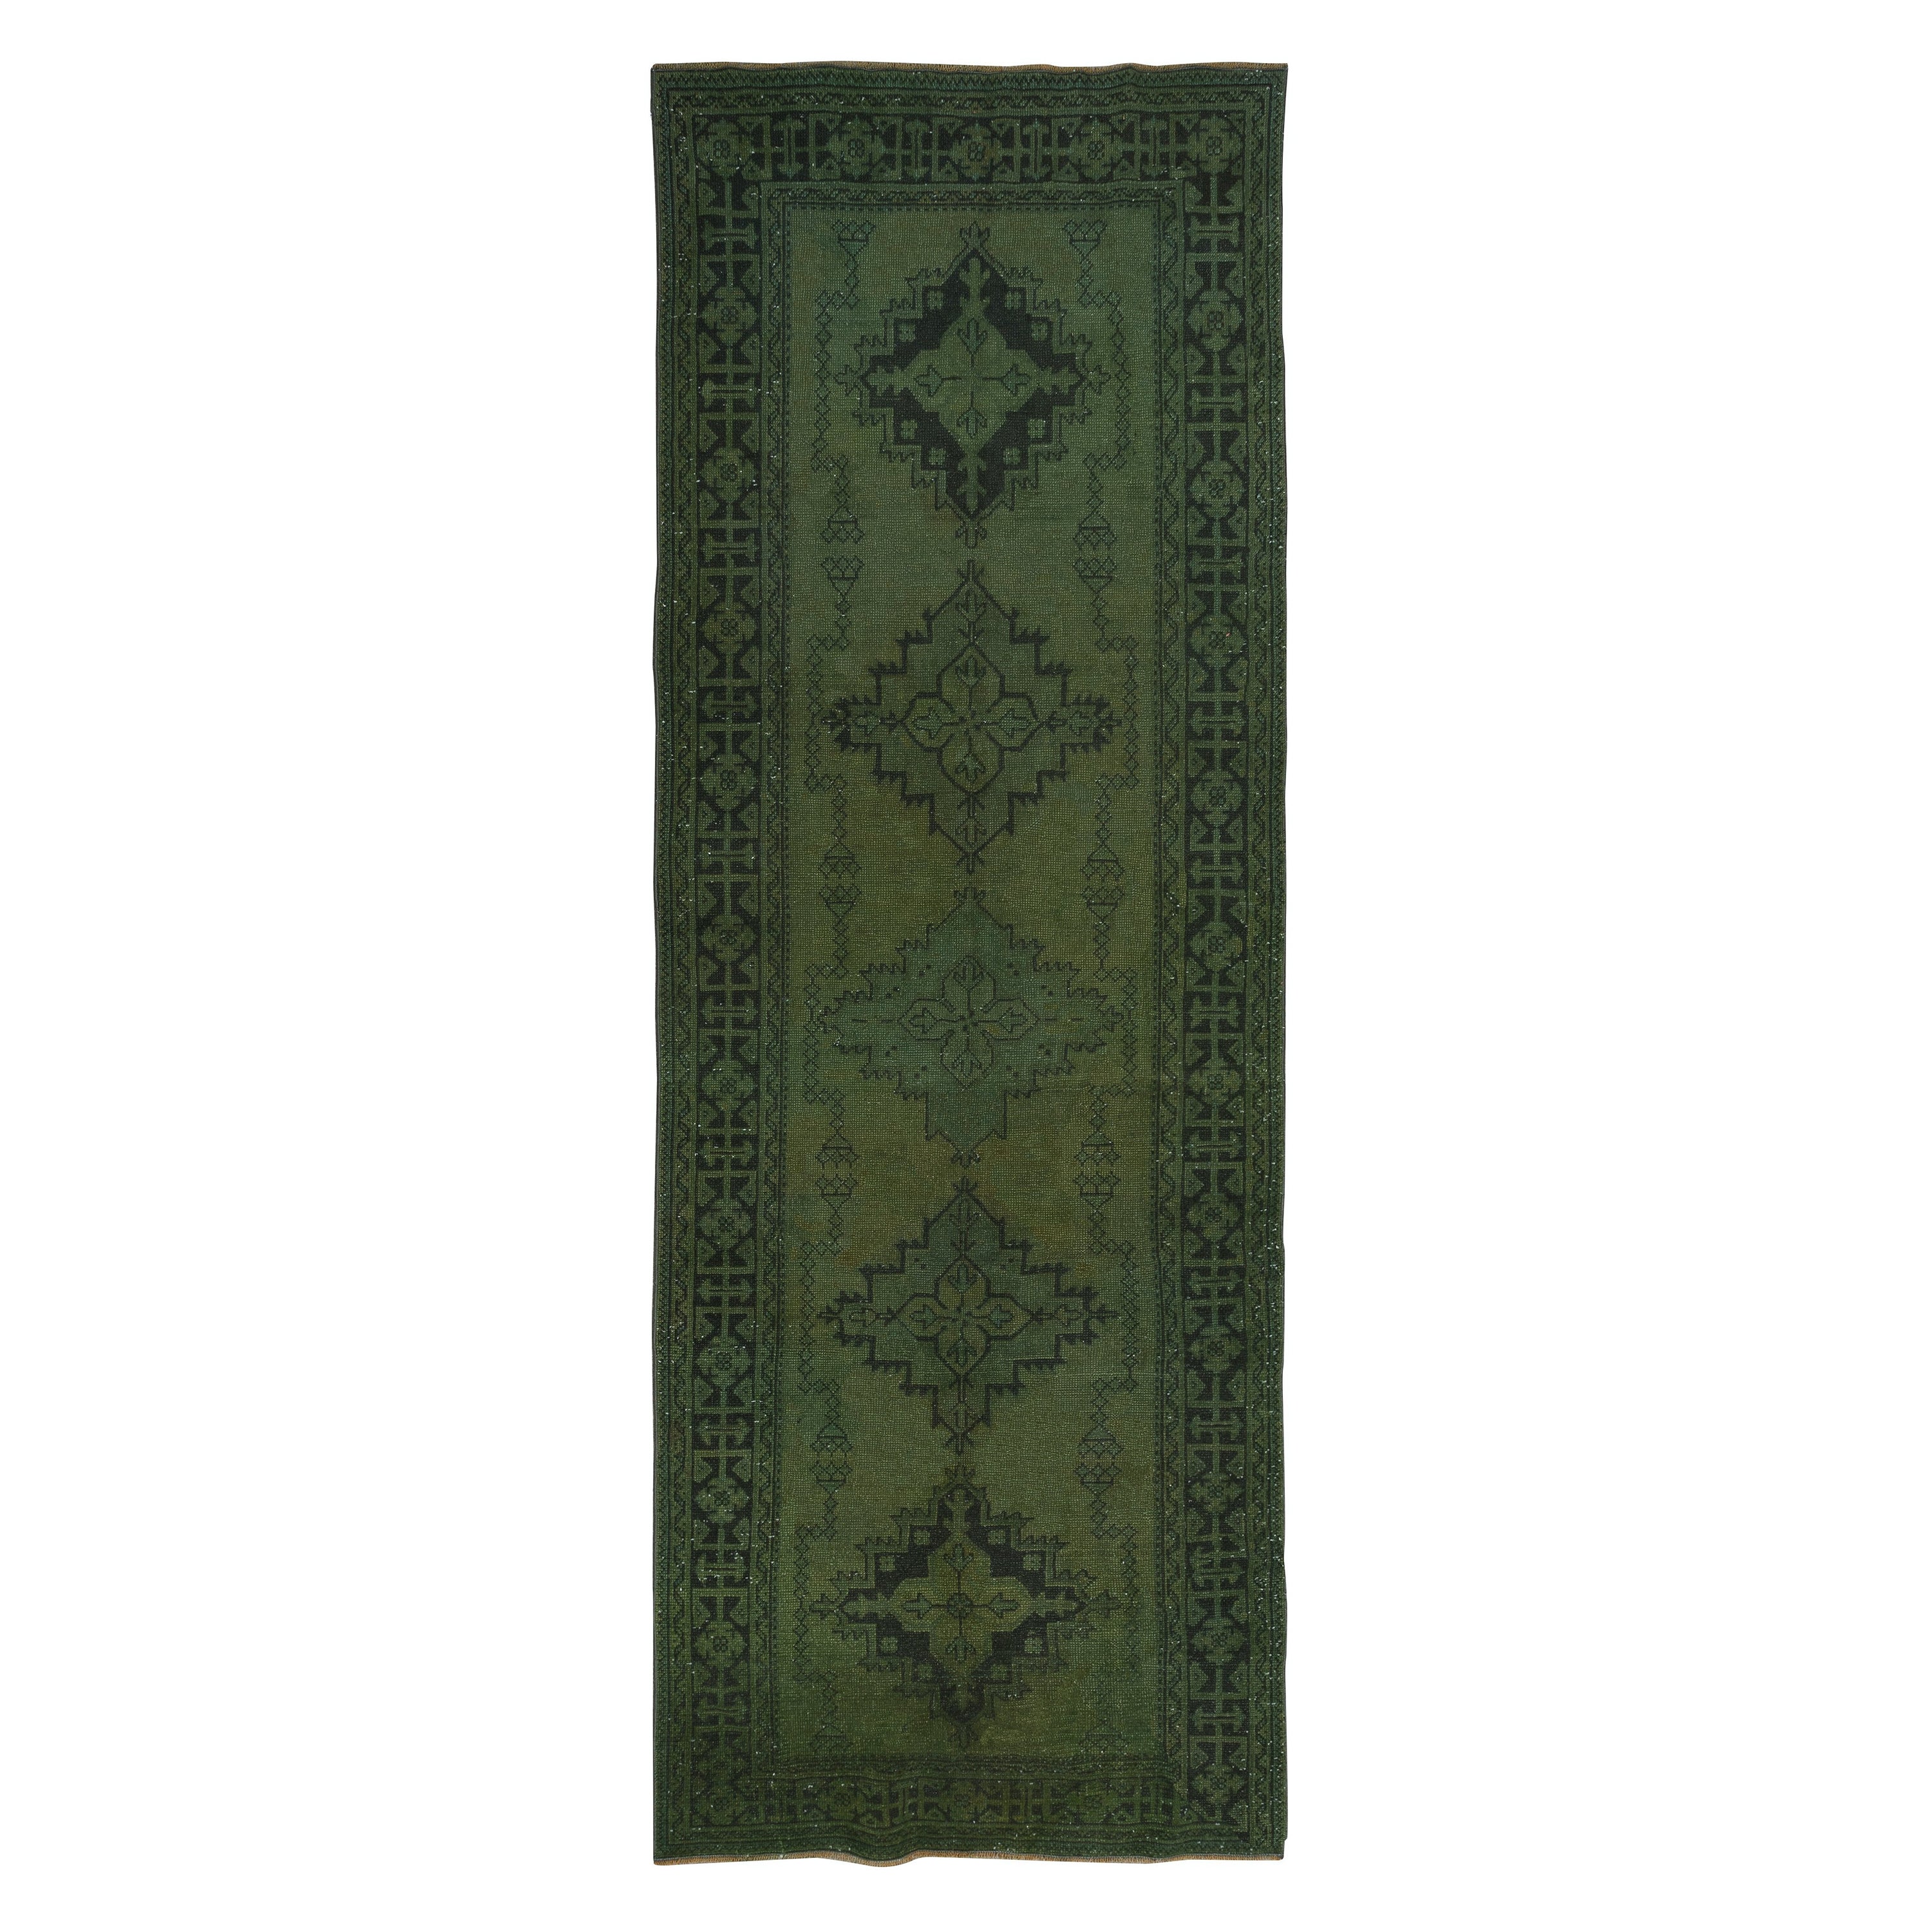 4.6x12.3 Ft Contemporary Handmade Turkish Dark Green Runner Rug for Hallway